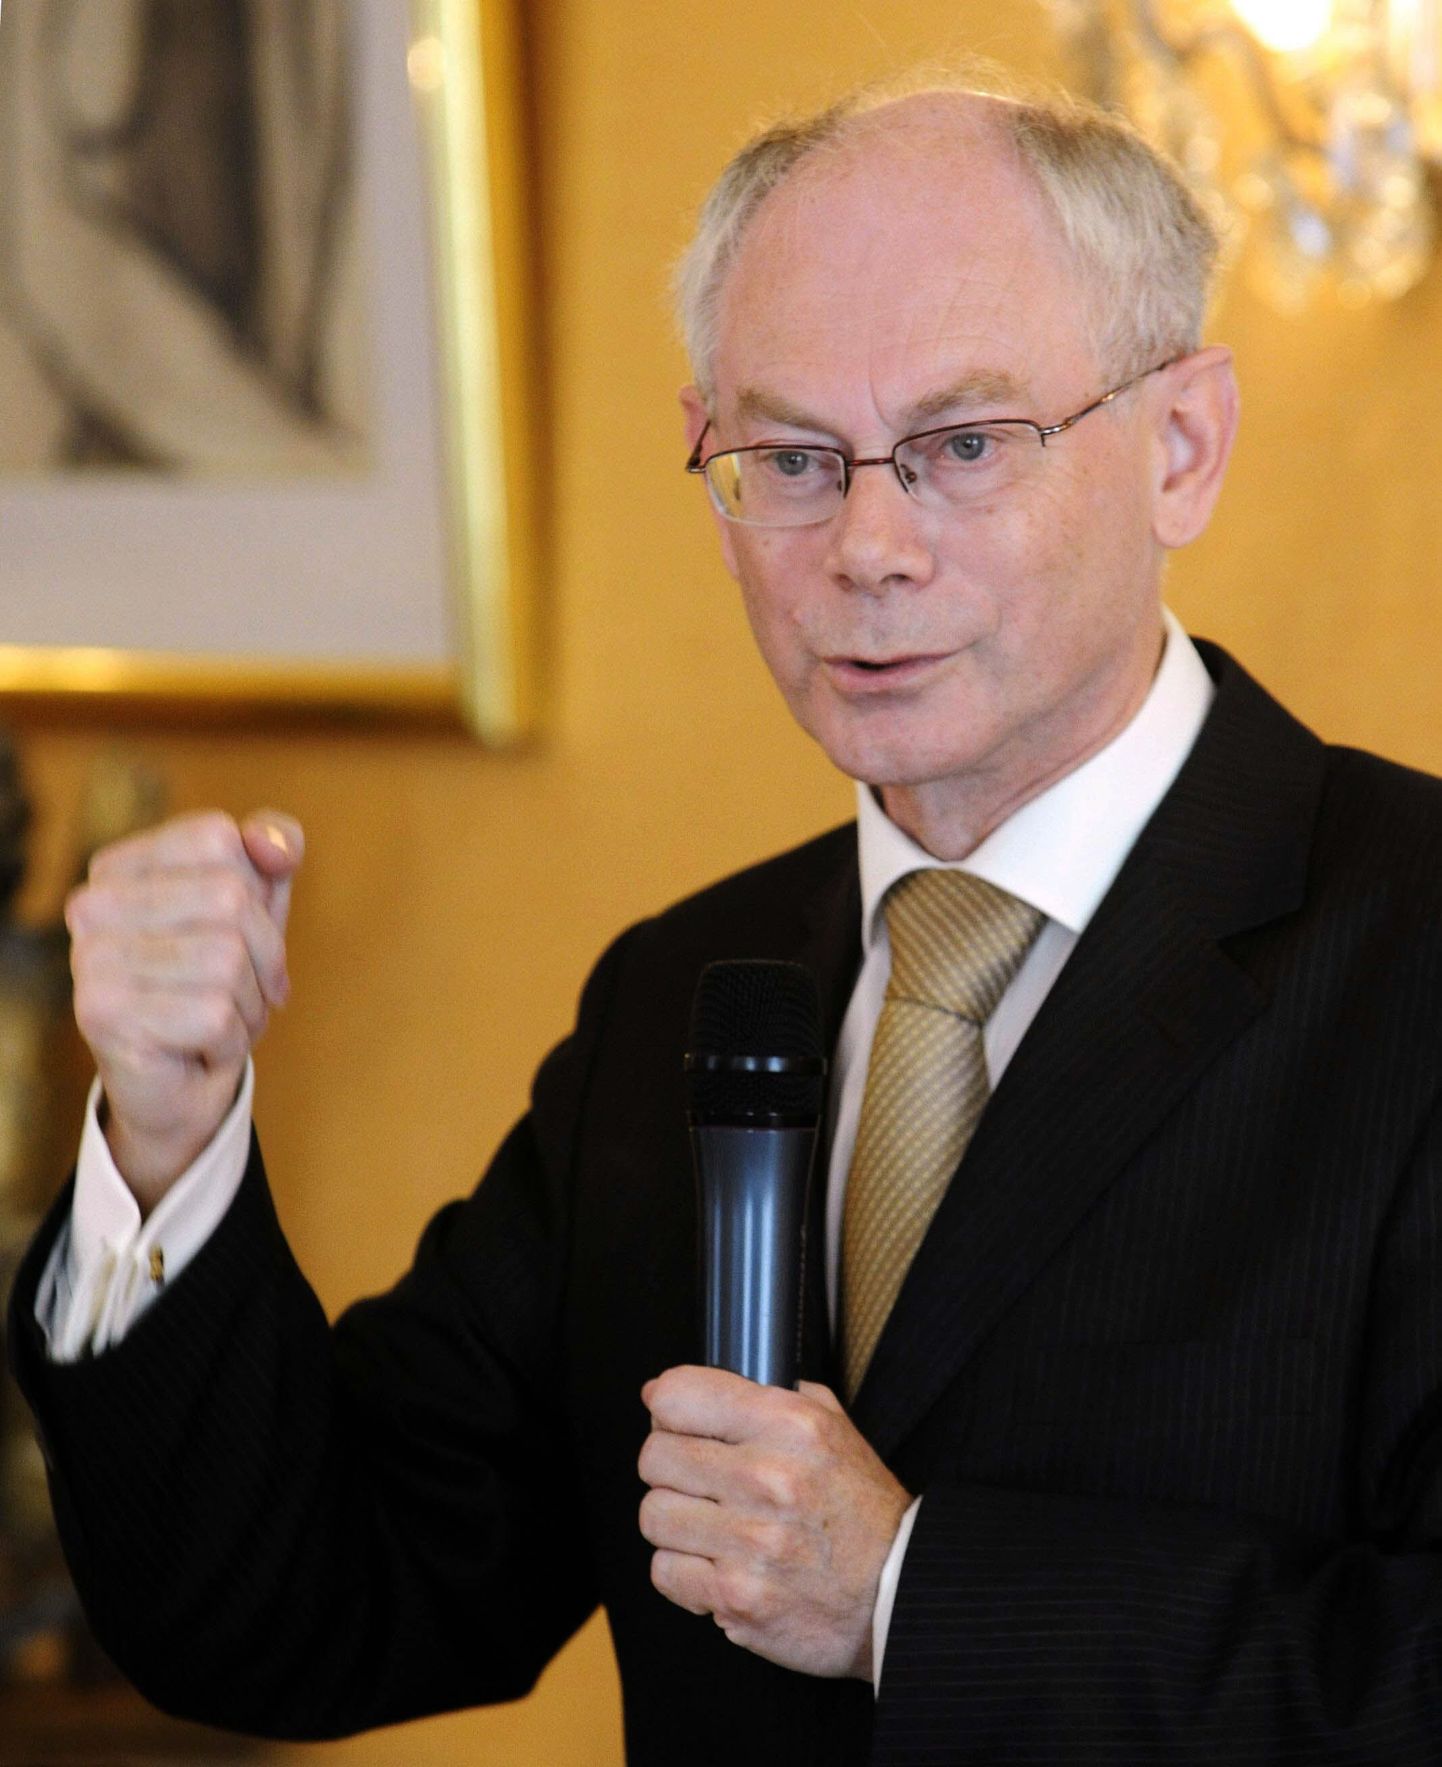 Herman Van Rompuy.